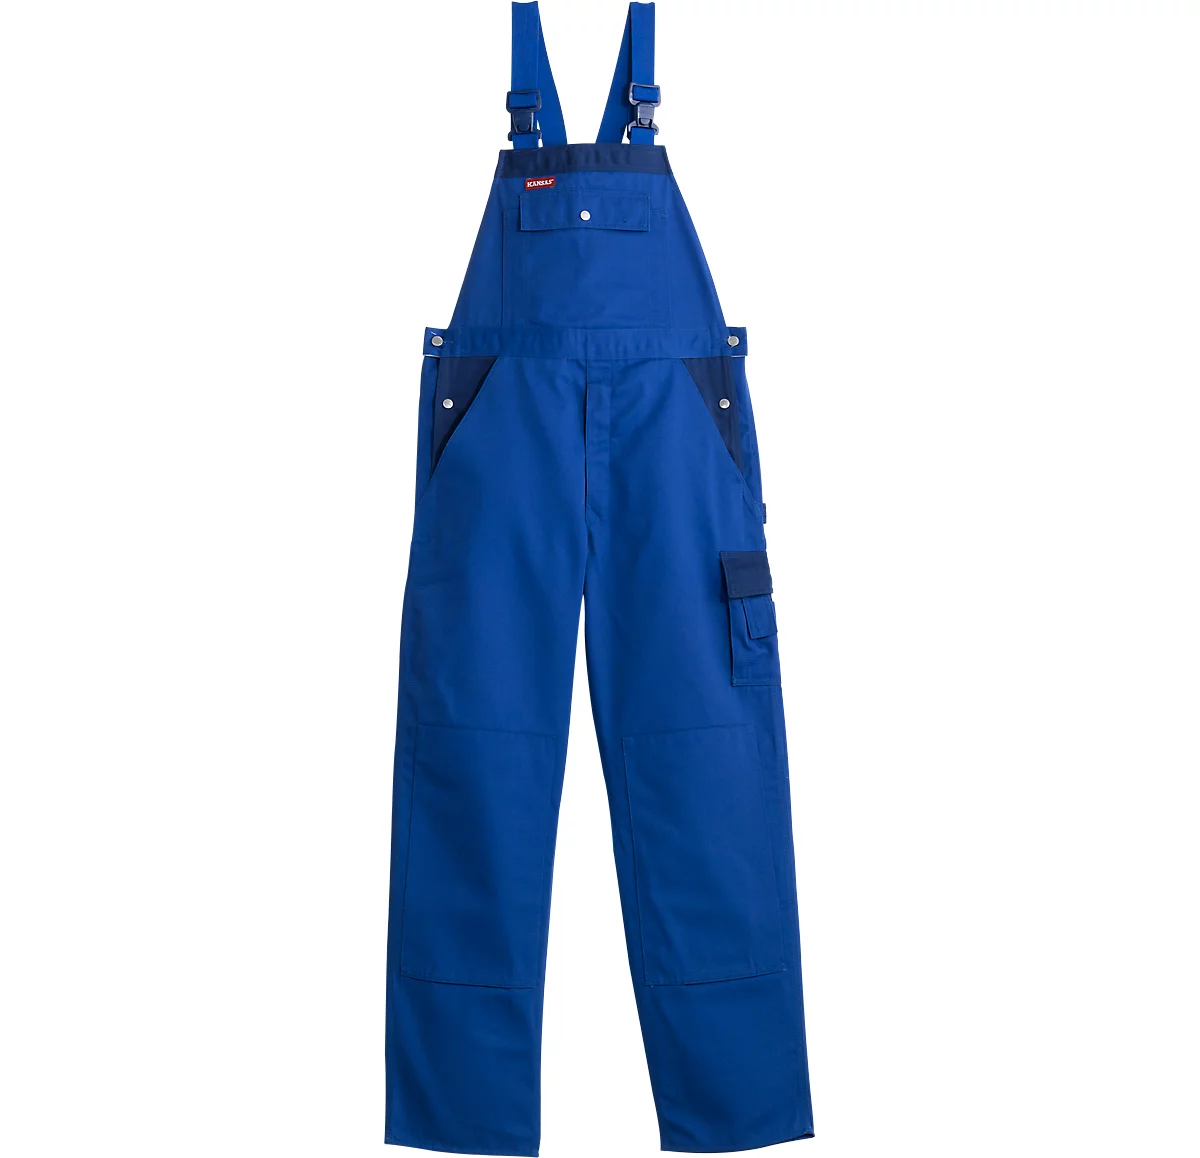 KANSAS® tuinbroek Color, blauw/marine, m. 50